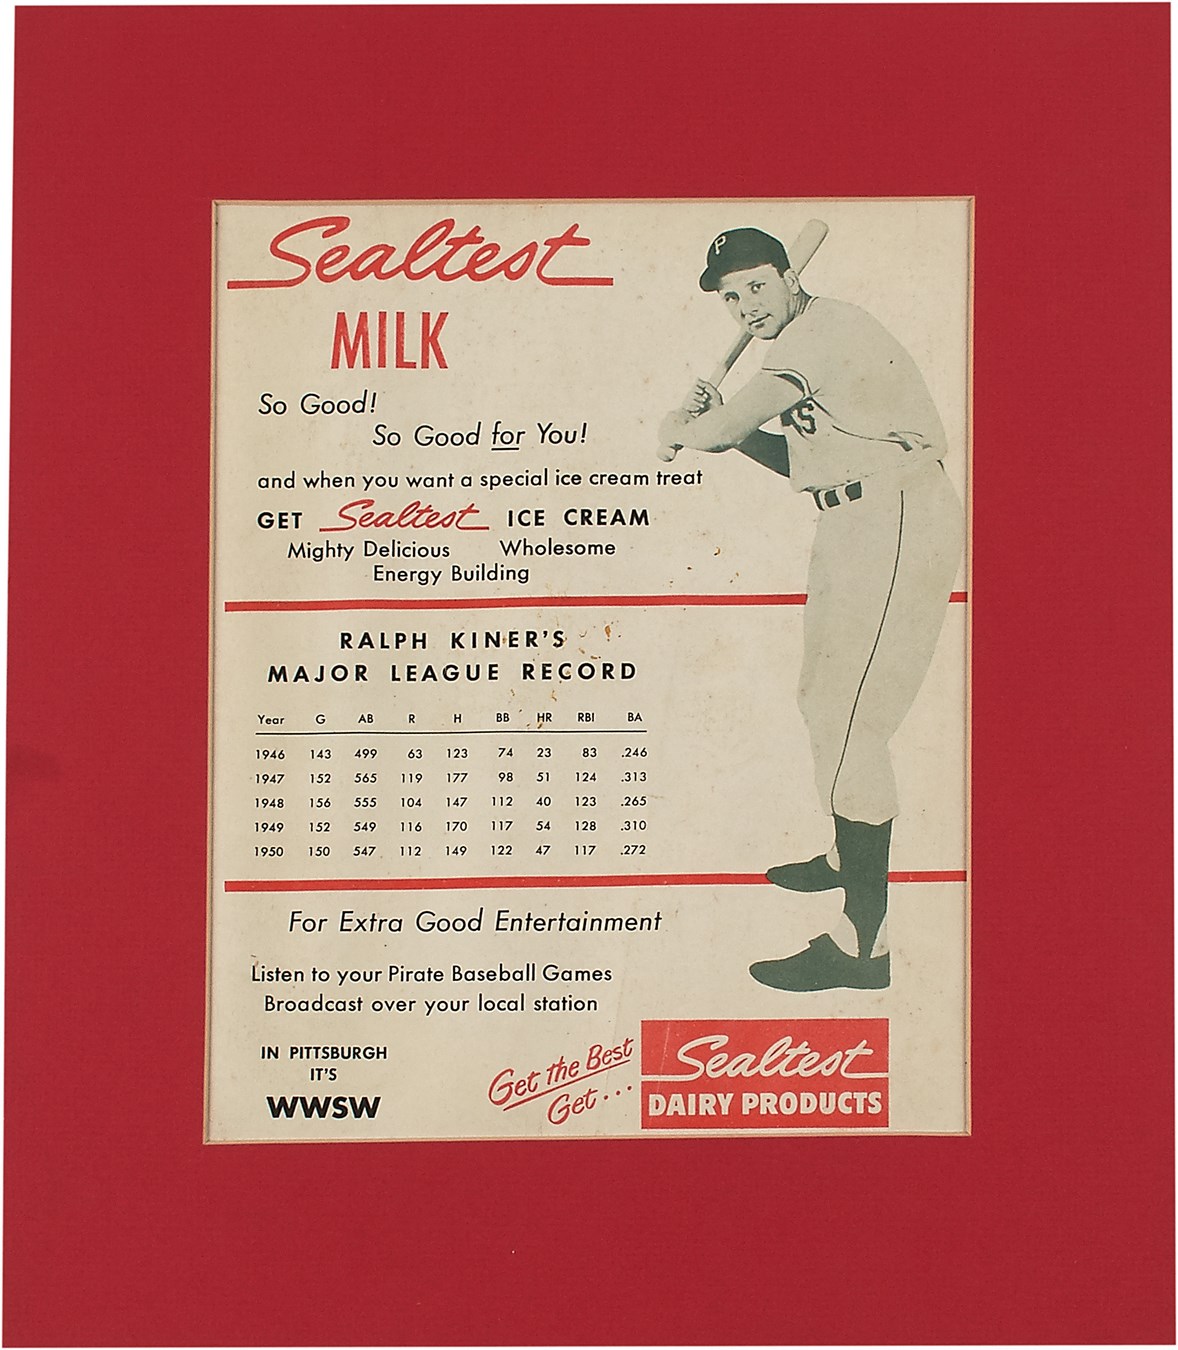 Baseball Memorabilia - 1951 Ralph Kiner Sealtest Milk Small Advertising Poster